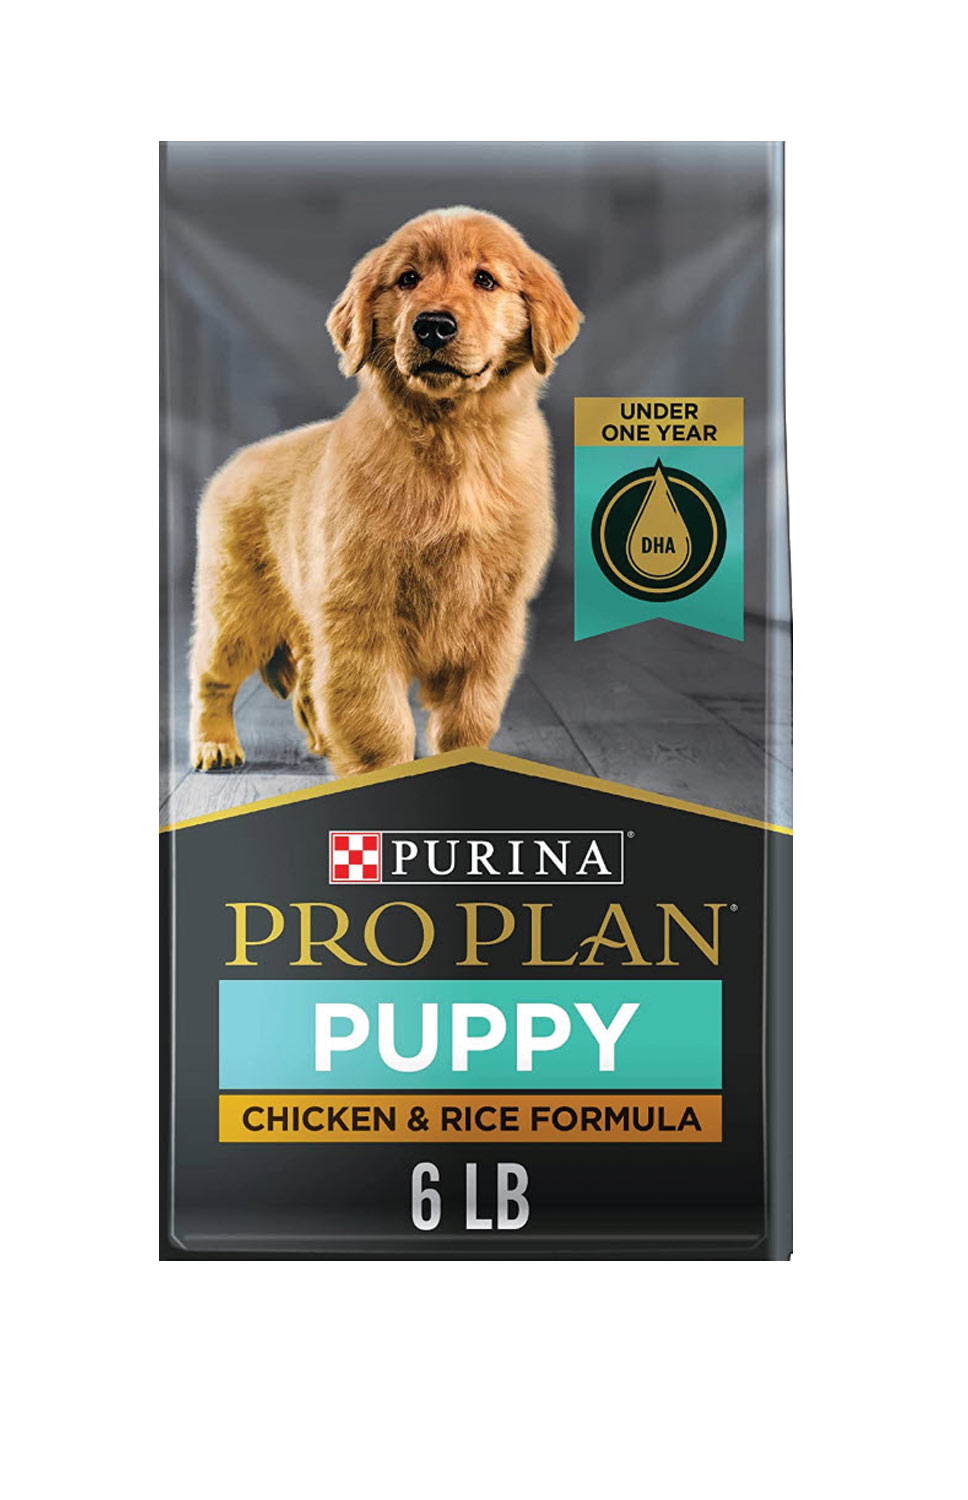 Purina Pro Plan Puppy Food